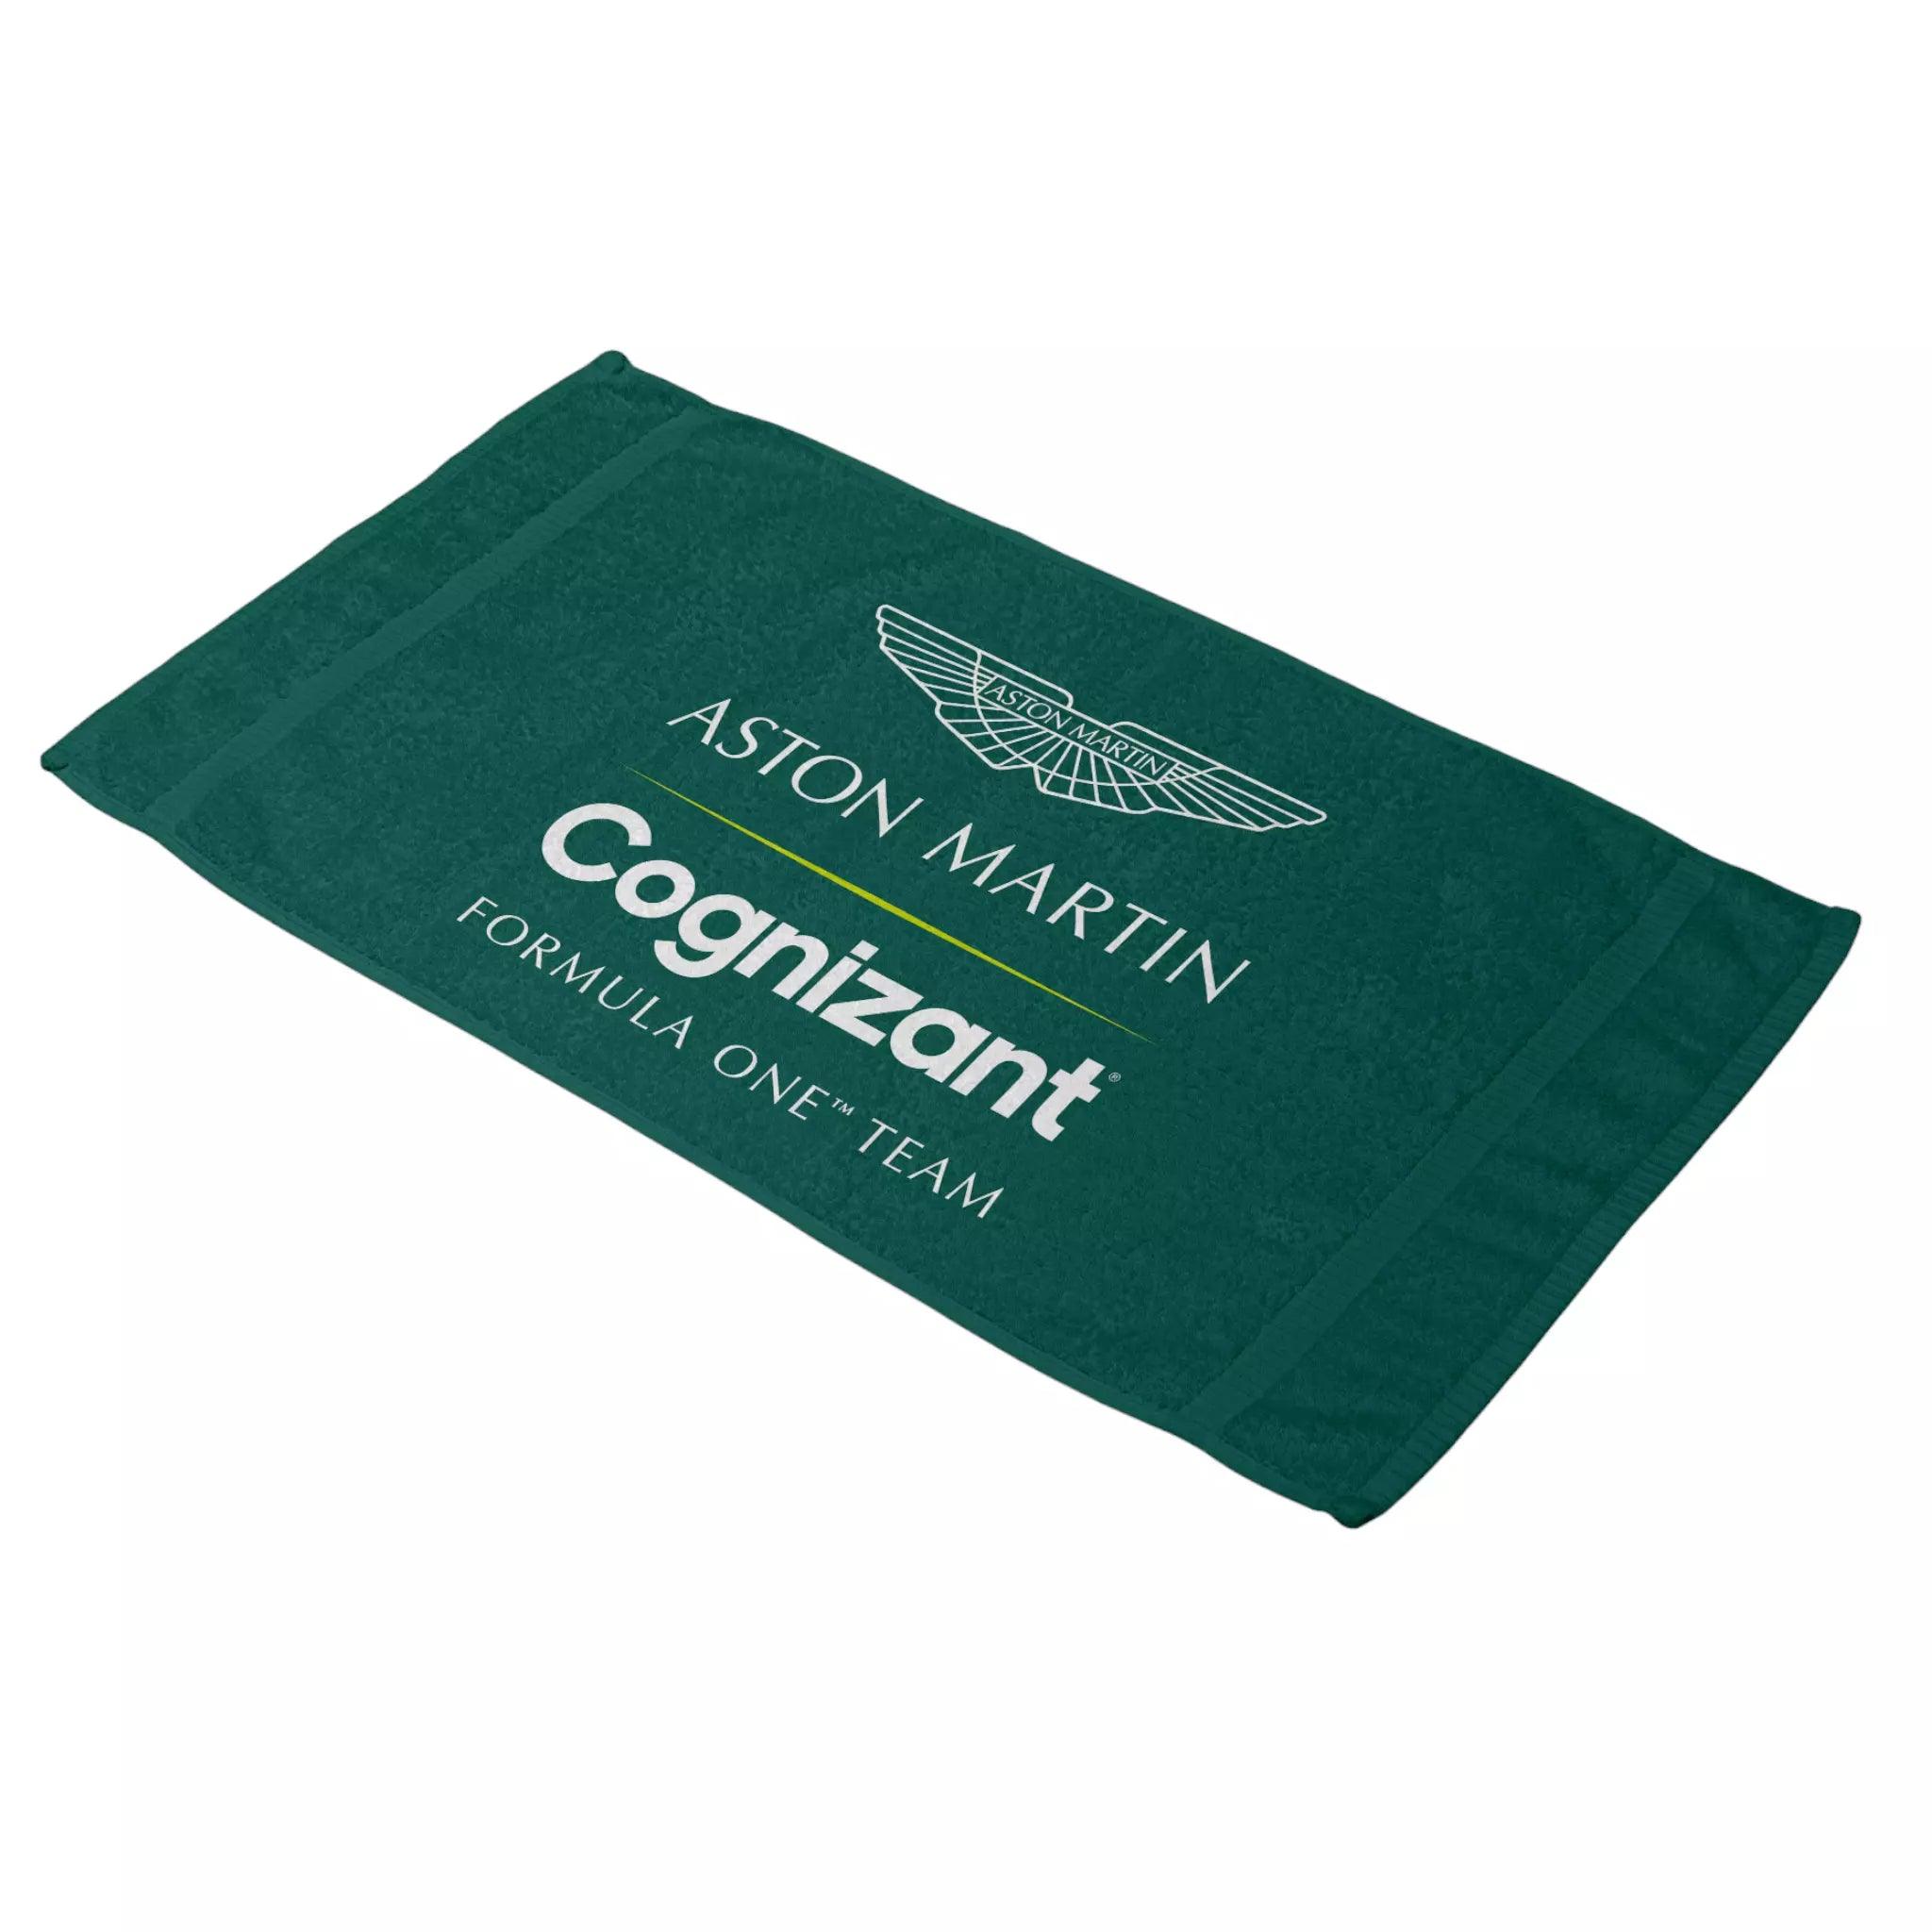 Aston Martin Microfabric Towel - Dash Racegear 